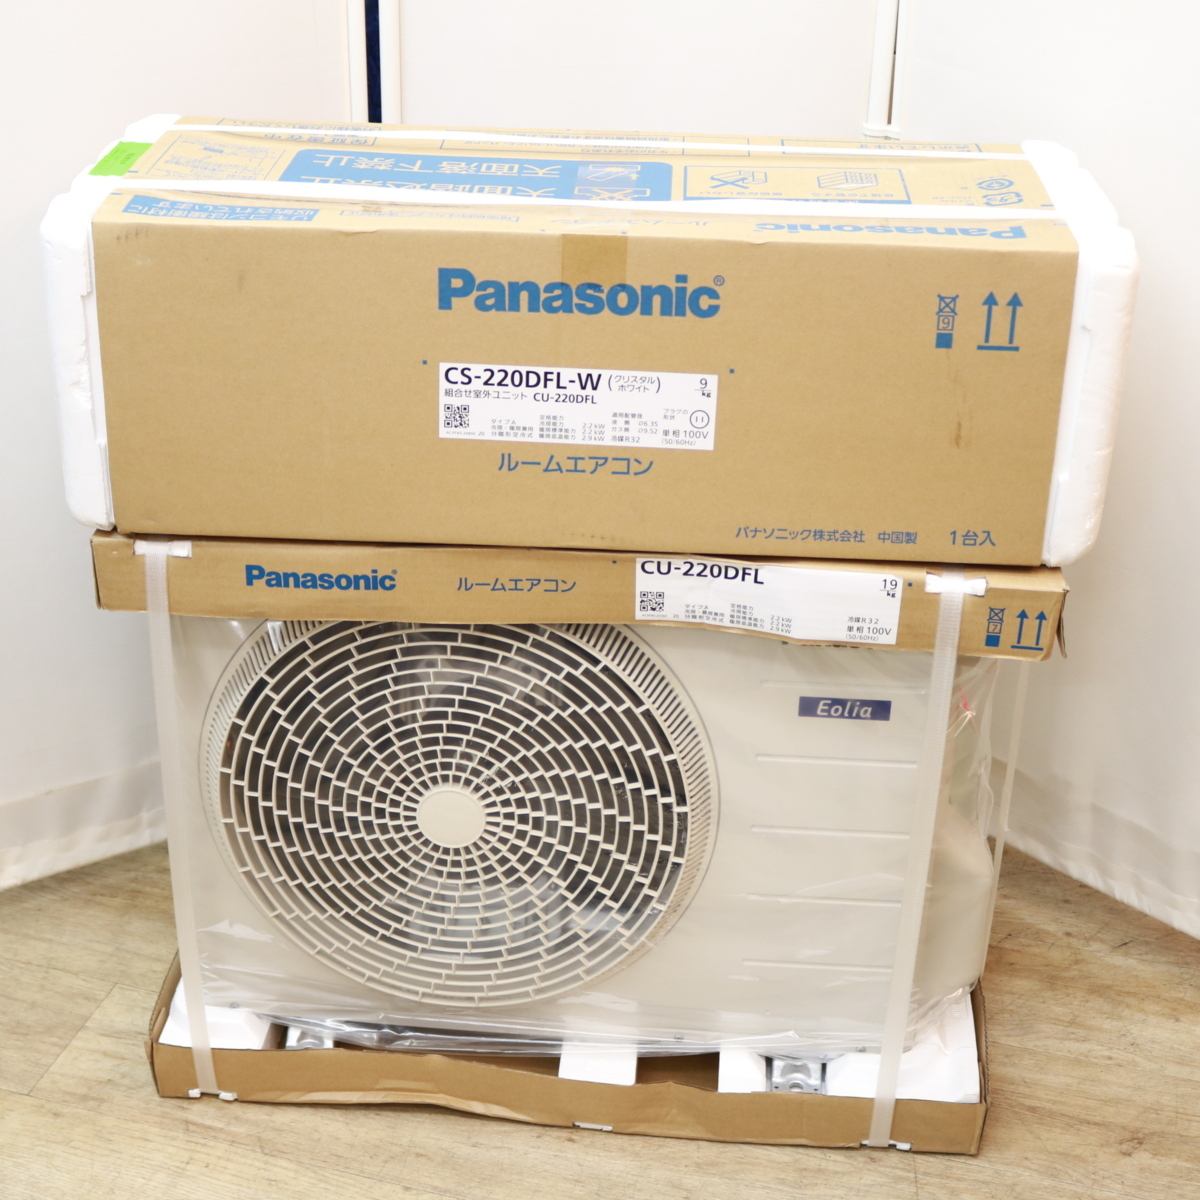 Panasonic パナソニック ルームエアコン CS-220DFL 2.2kw 6畳